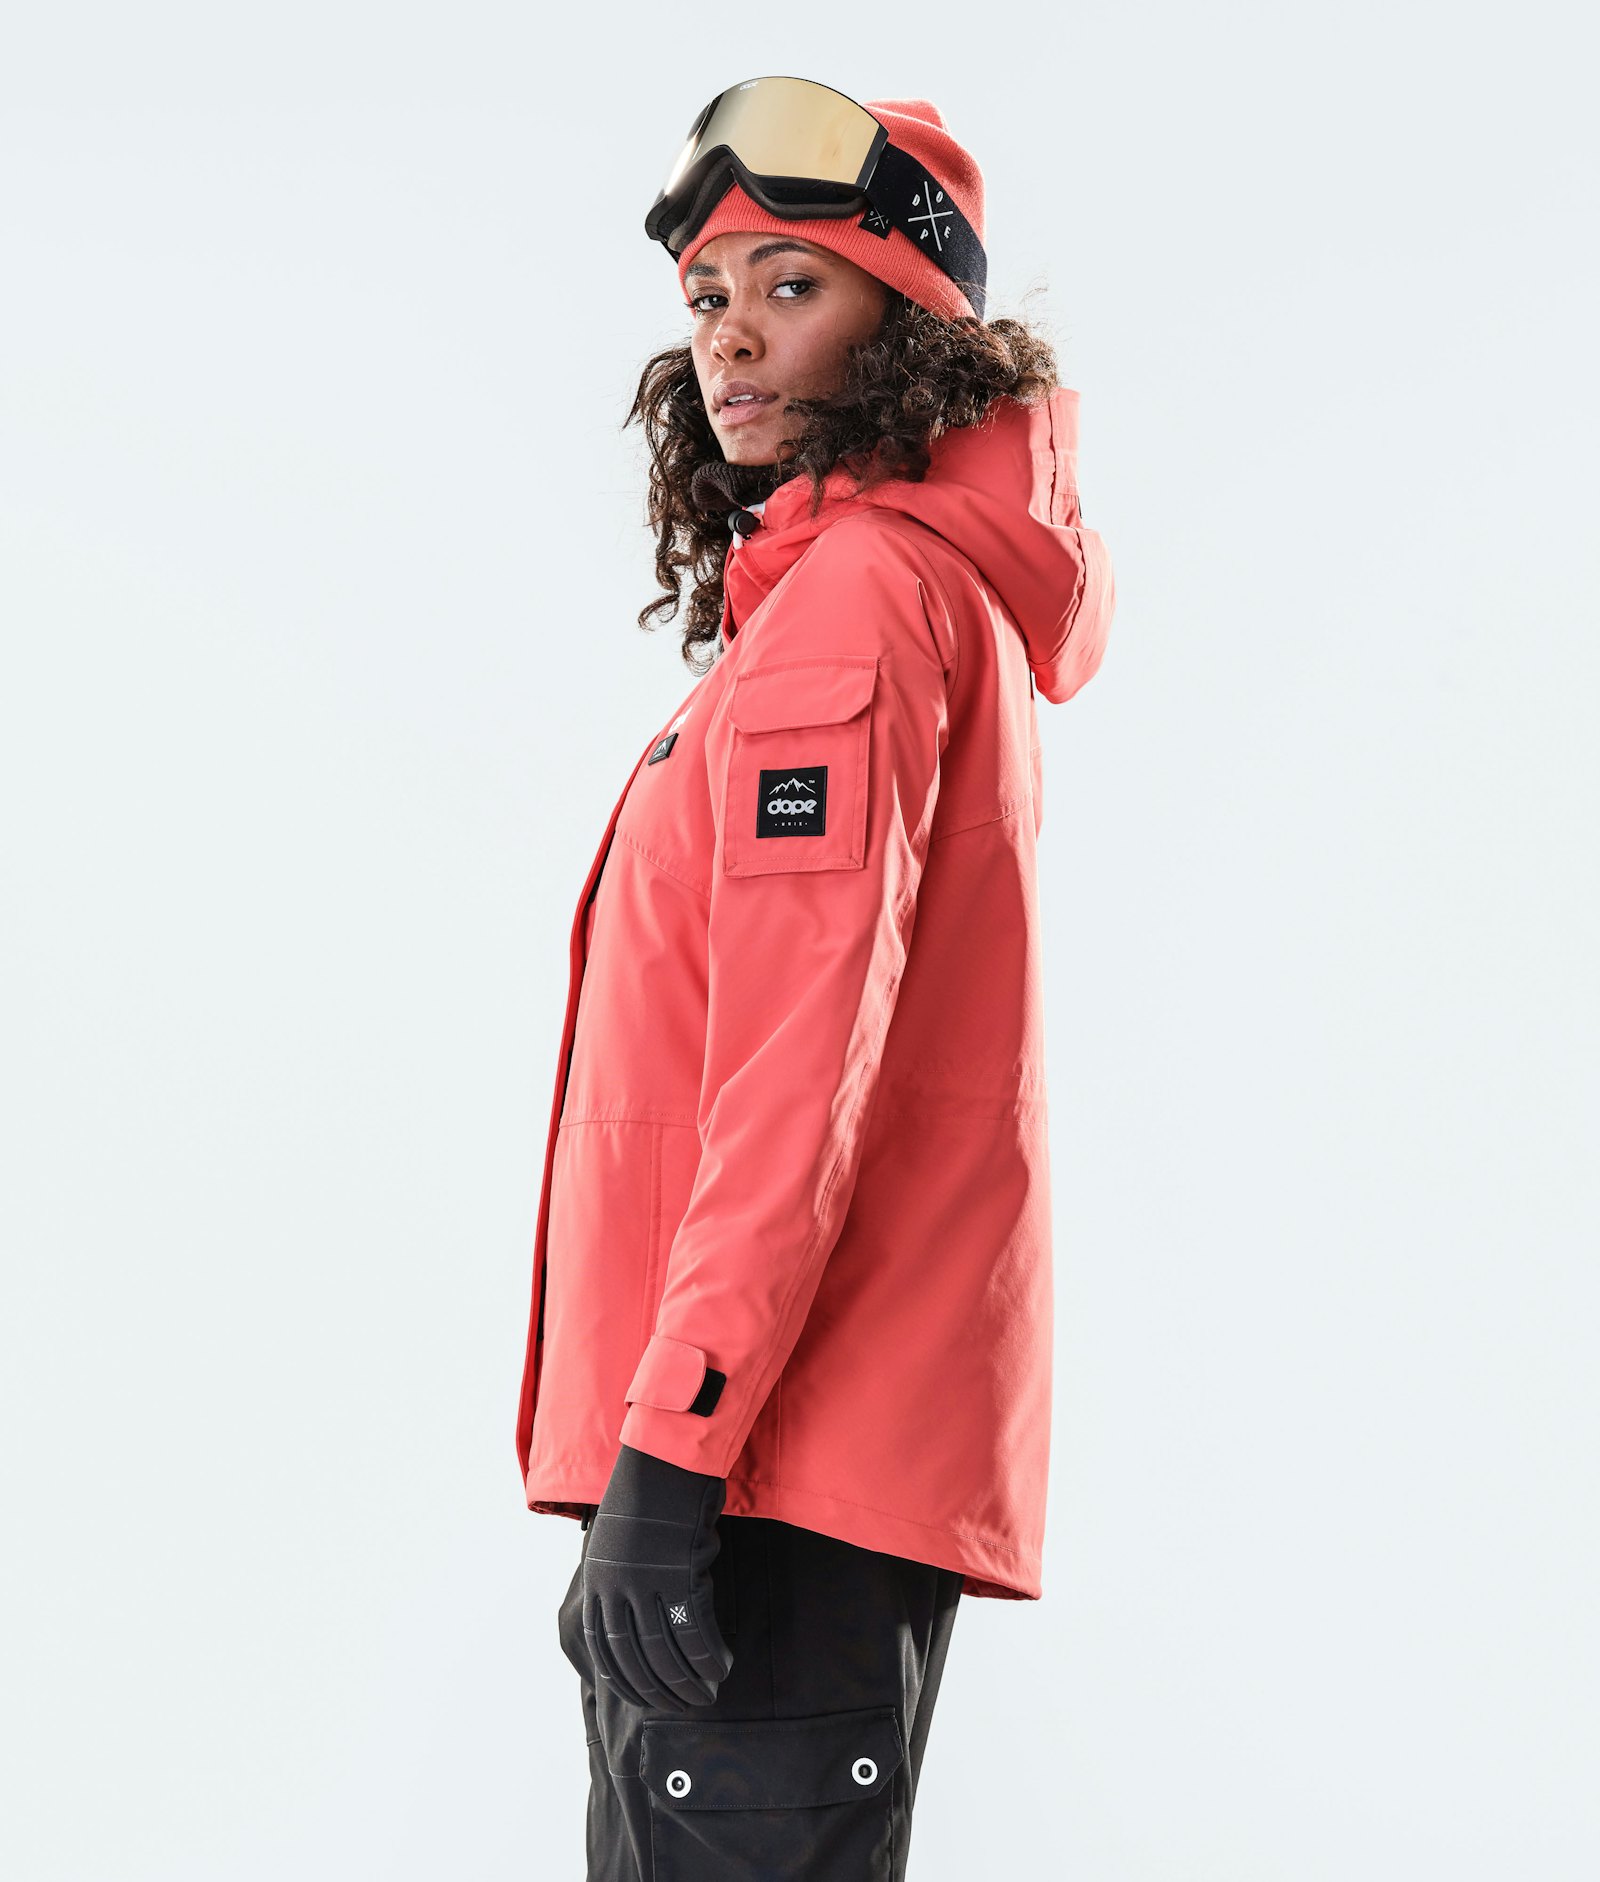 Adept W 2020 Ski Jacket Women Coral